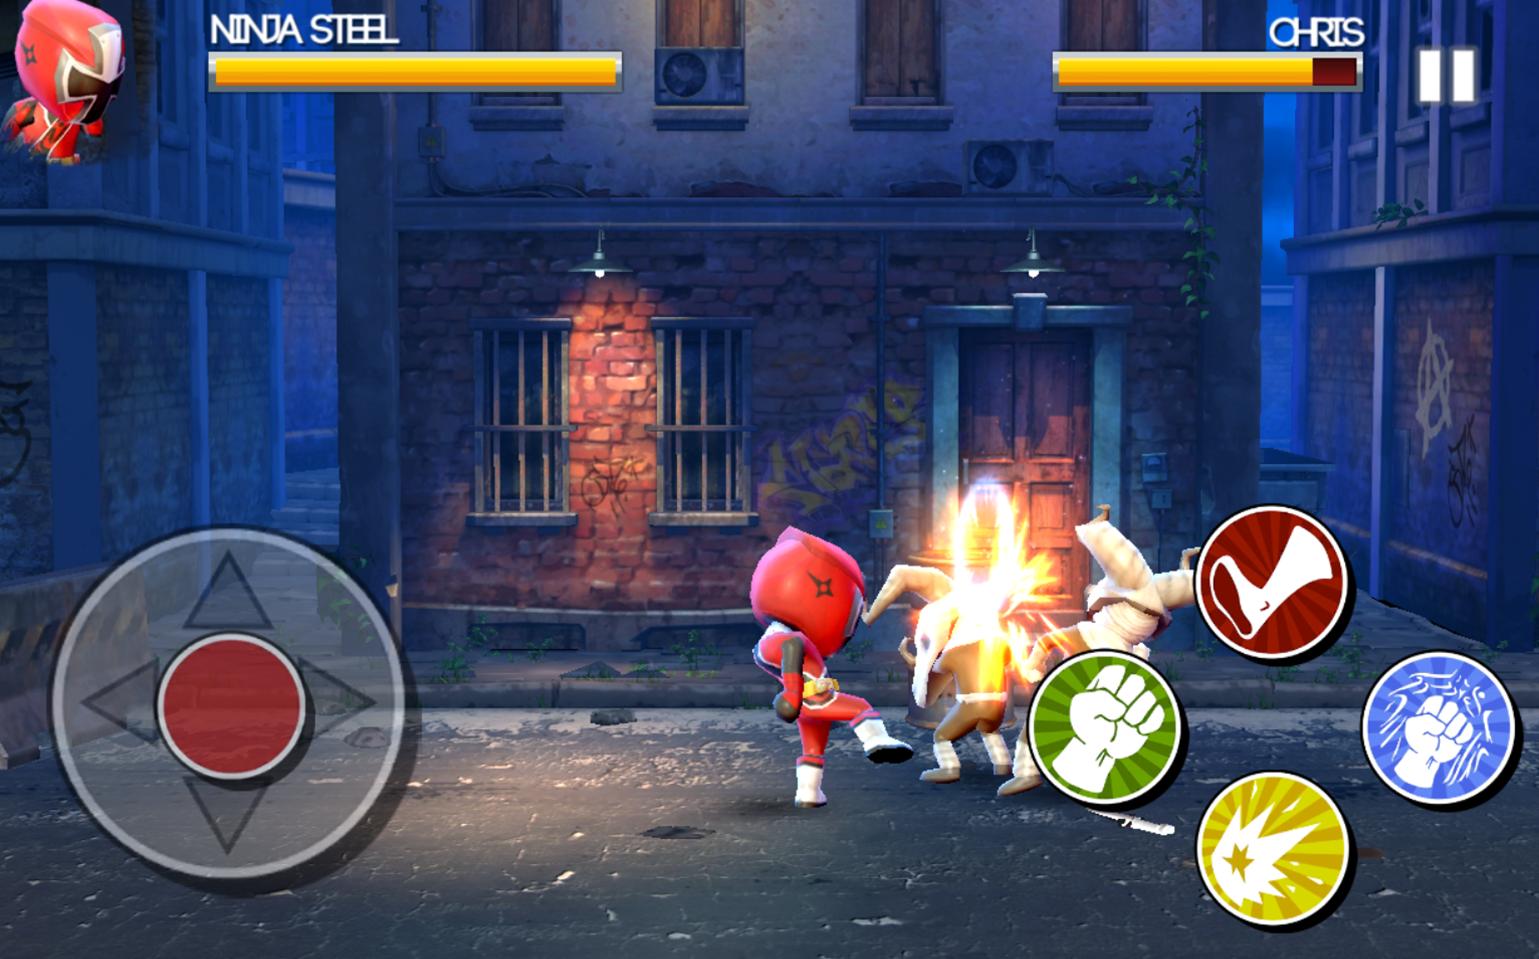 Power Ninja Steel for Android - APK Download